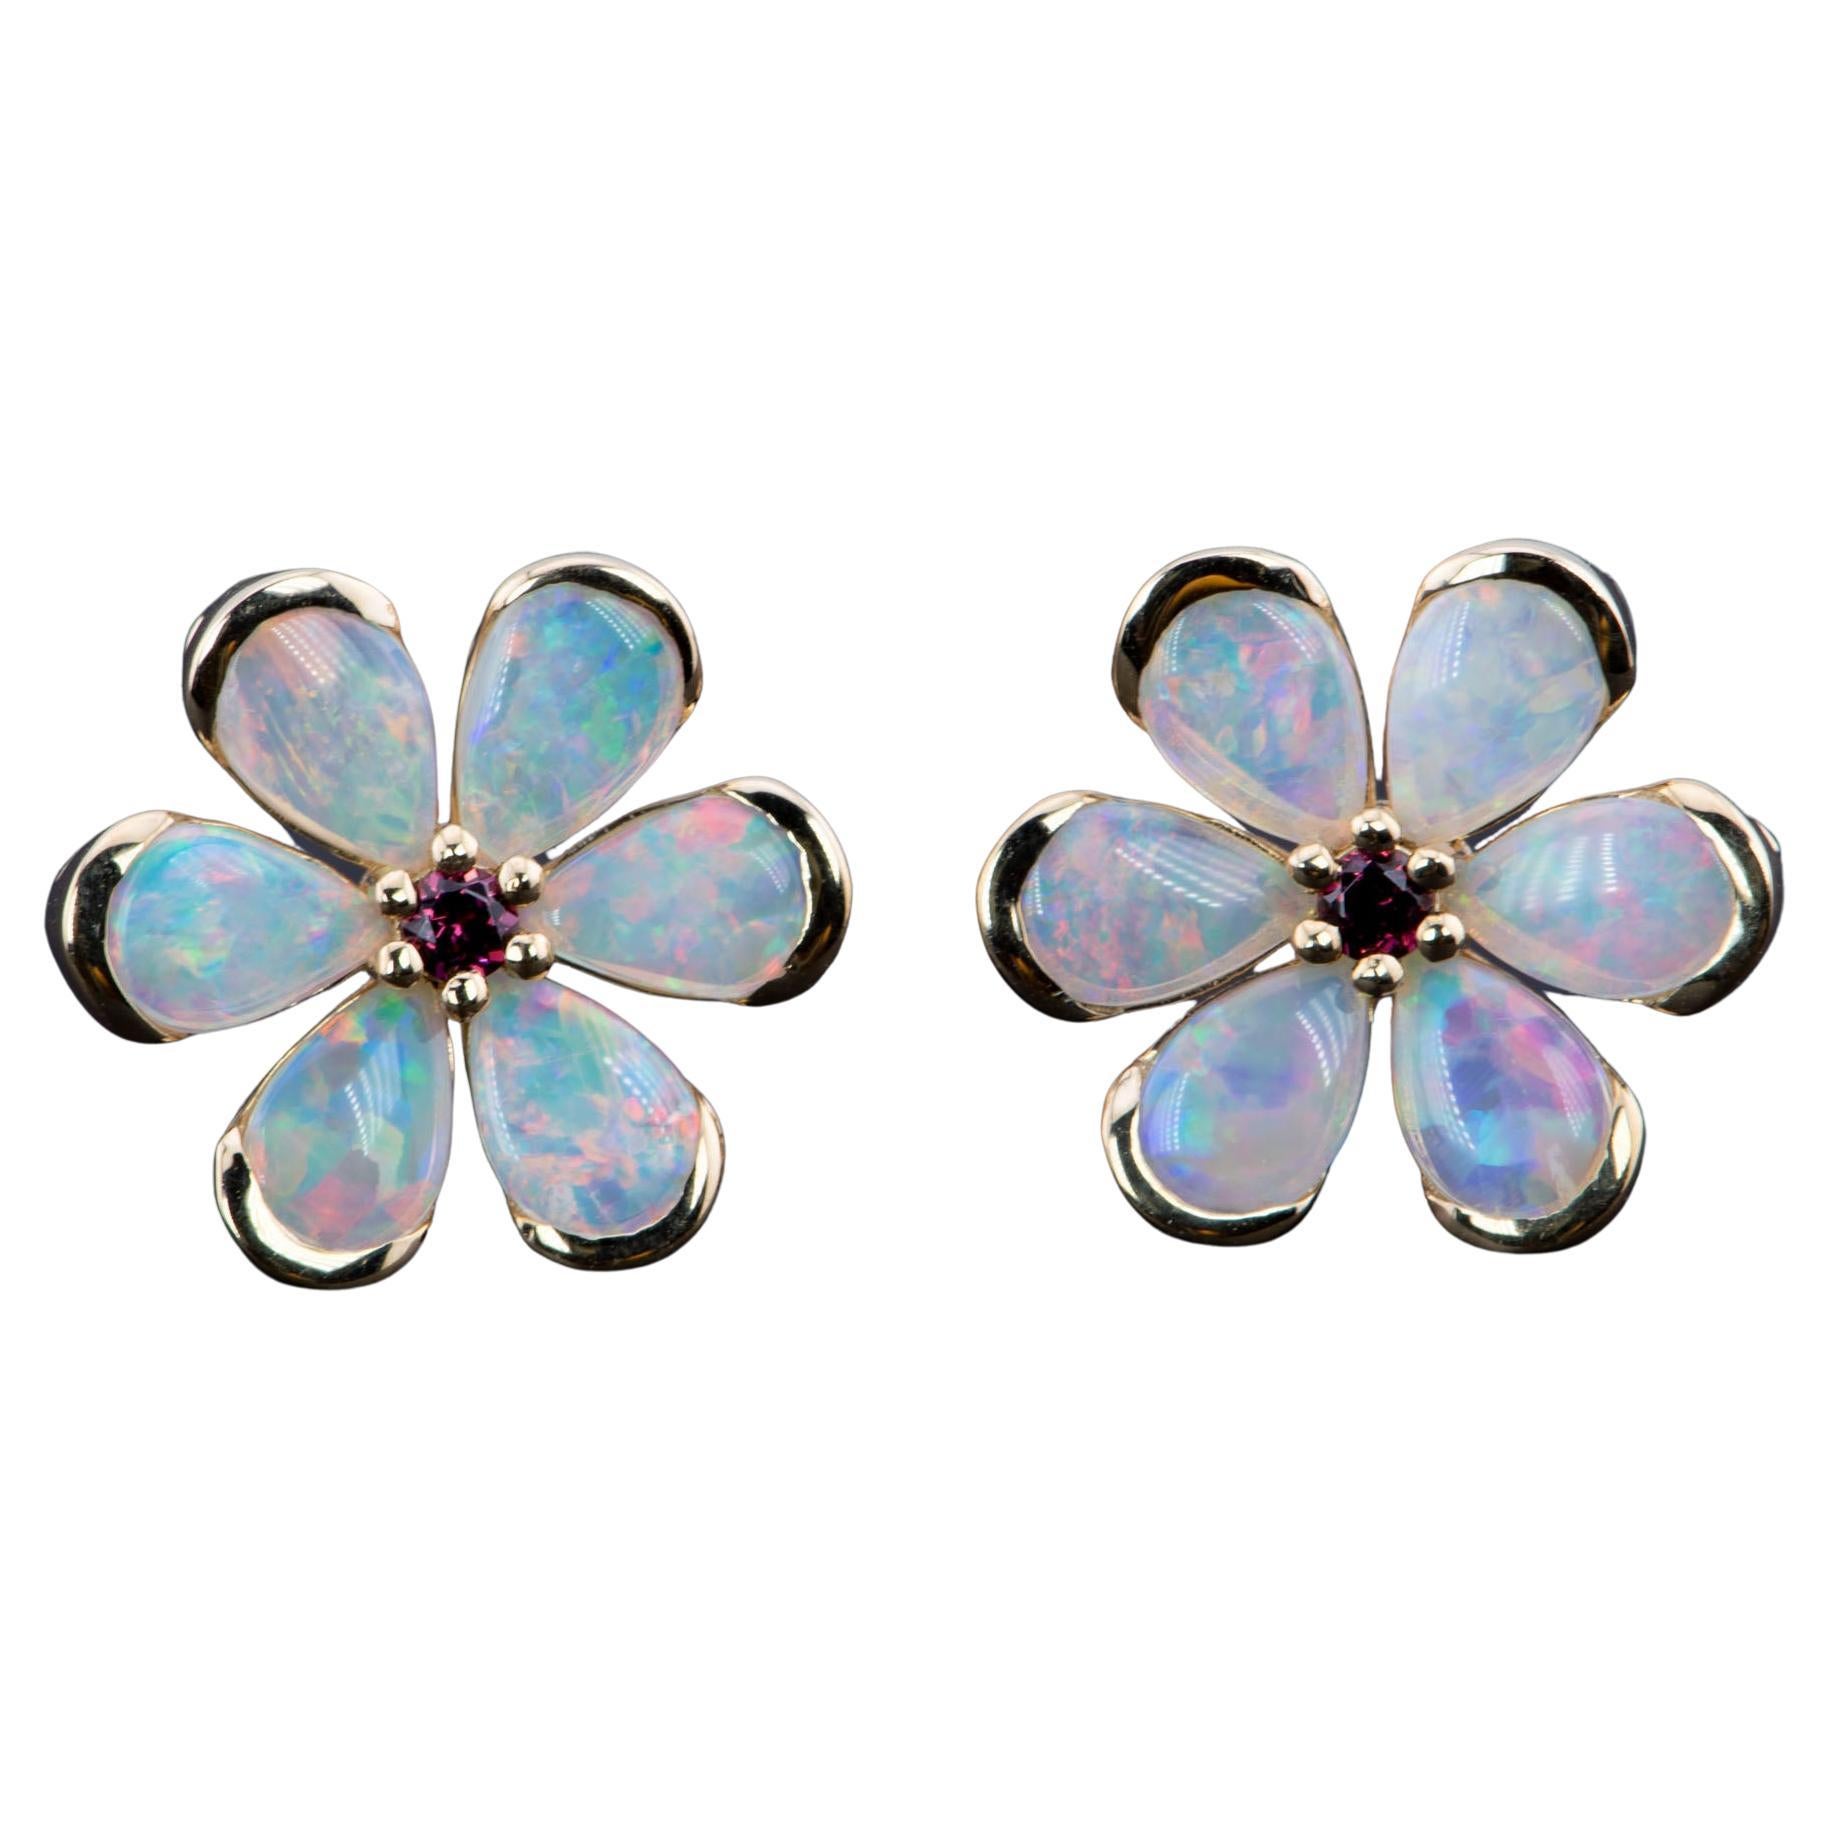 Solid Australian Opal Floral Style Earrings with Garnet Center 14K Gold